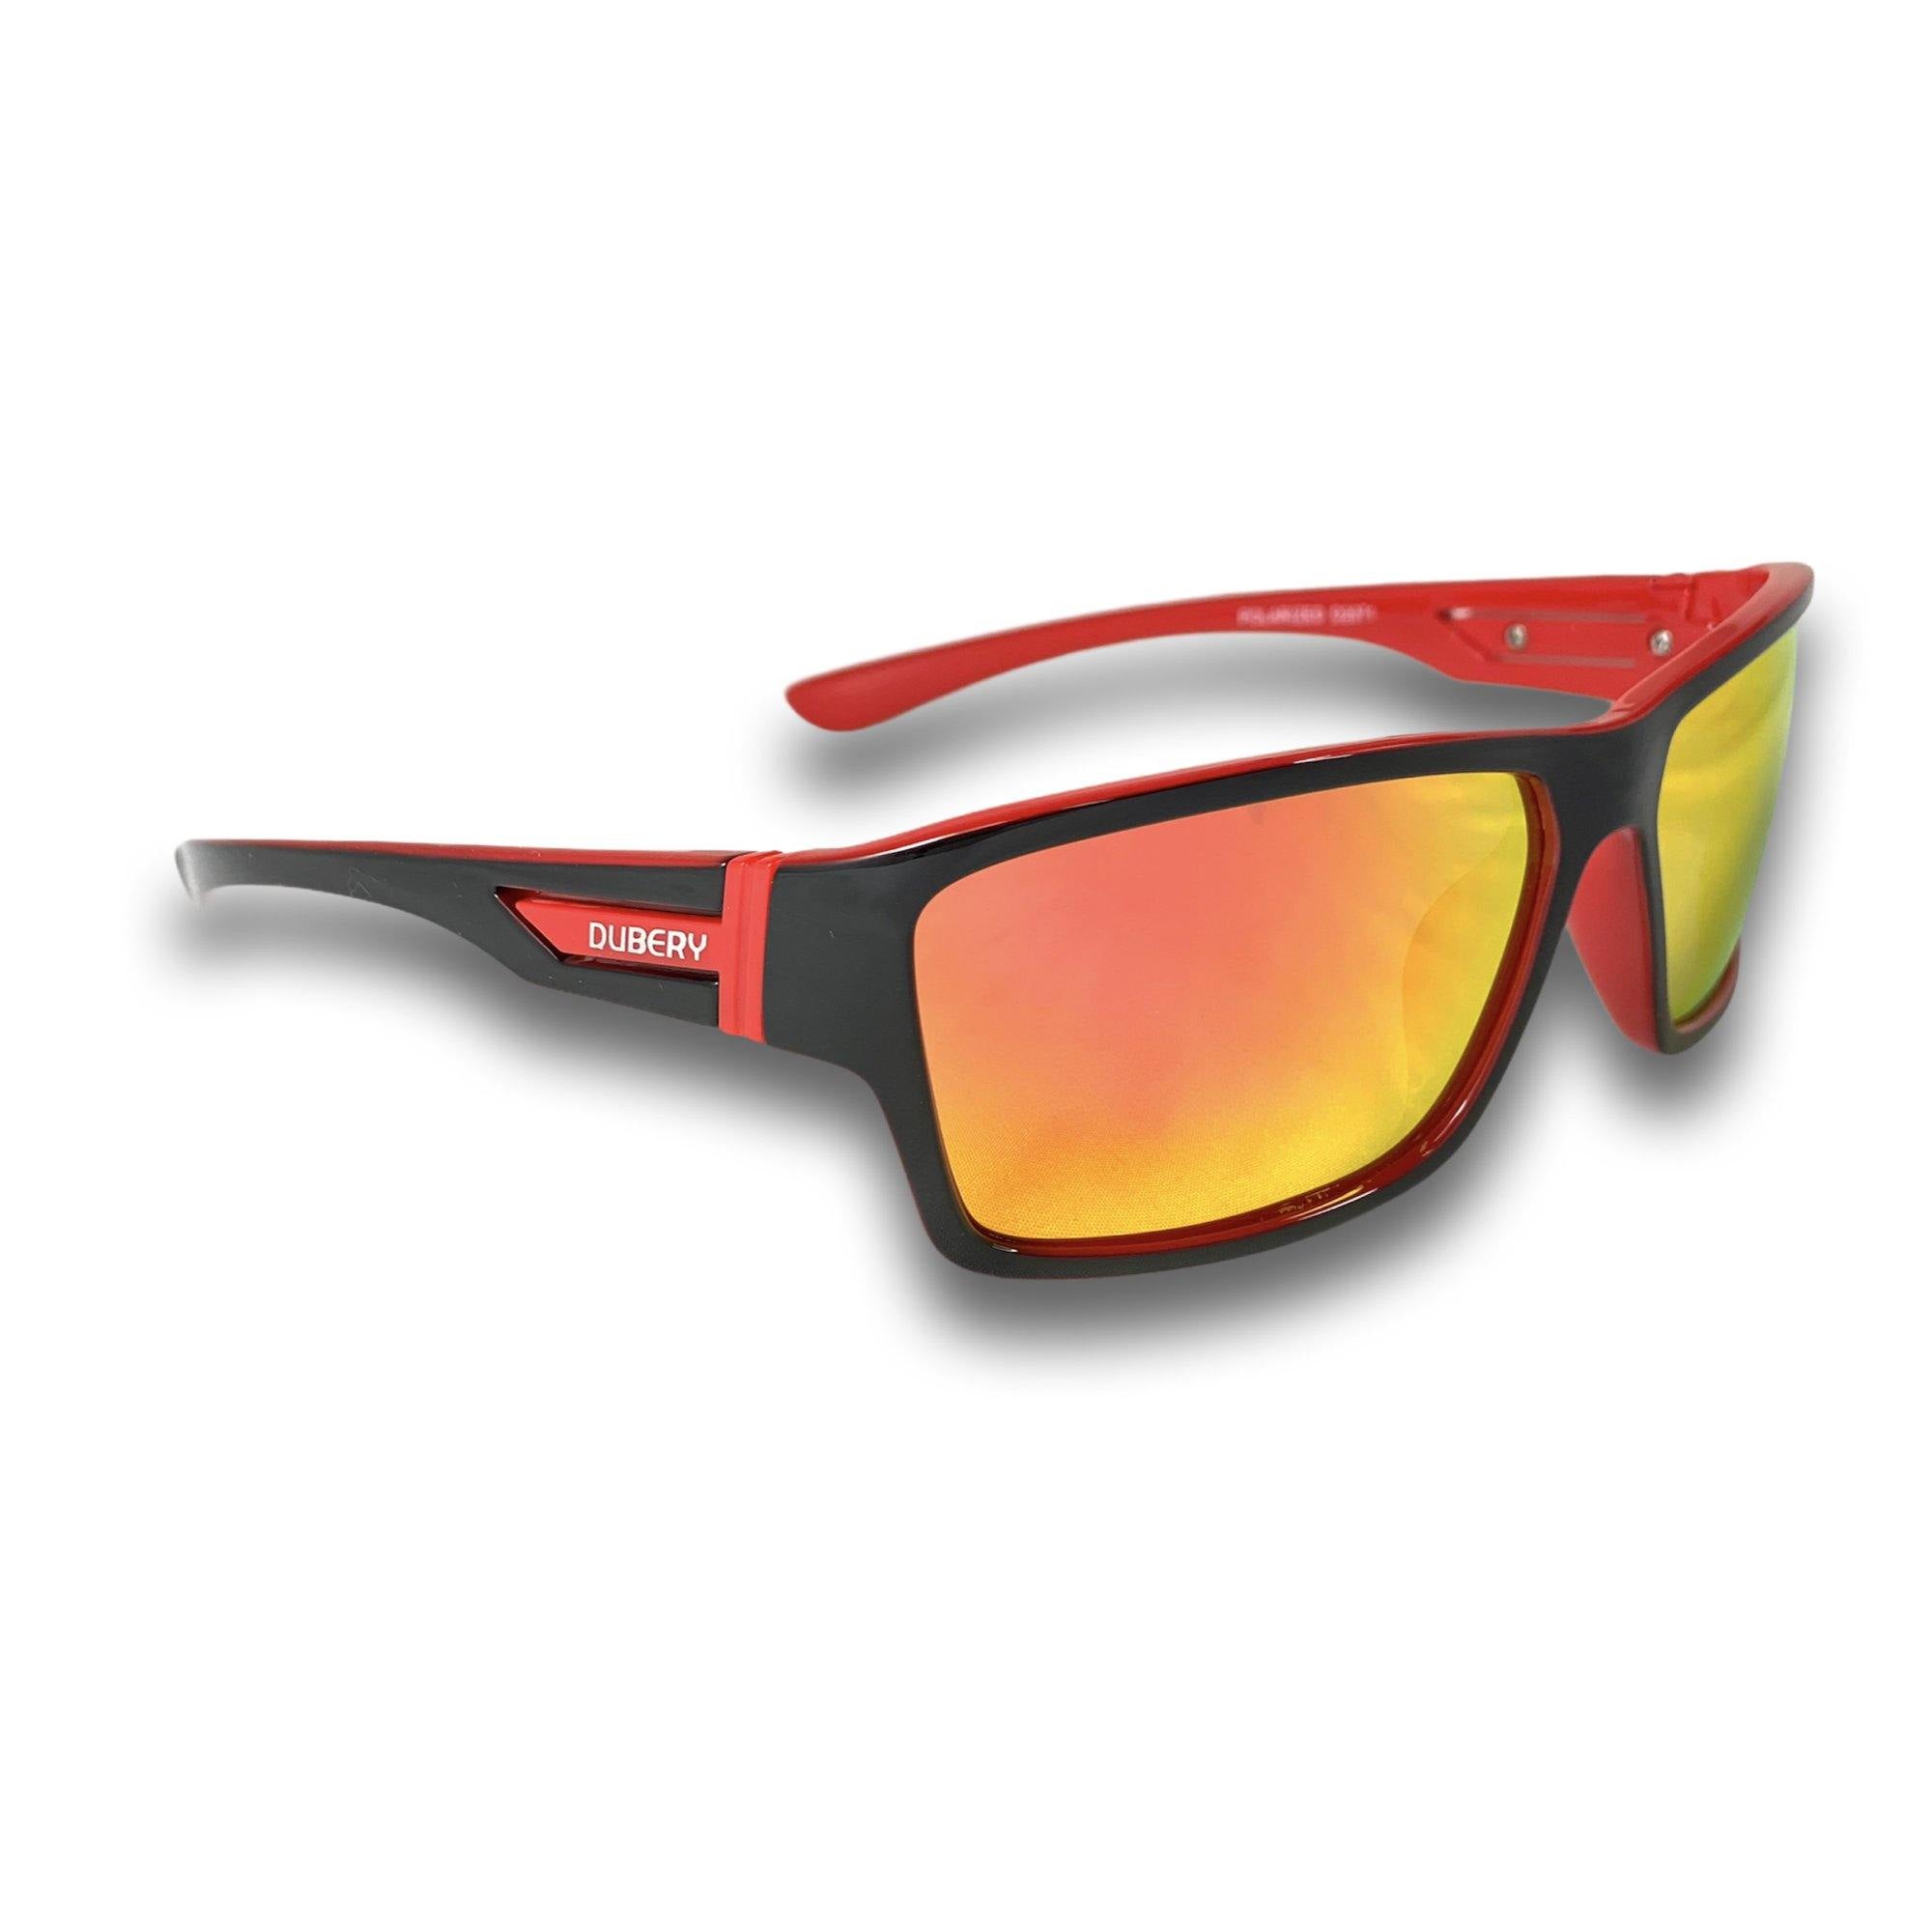 Dubery polarized sunglasses– Dubery Optics Sunglasses